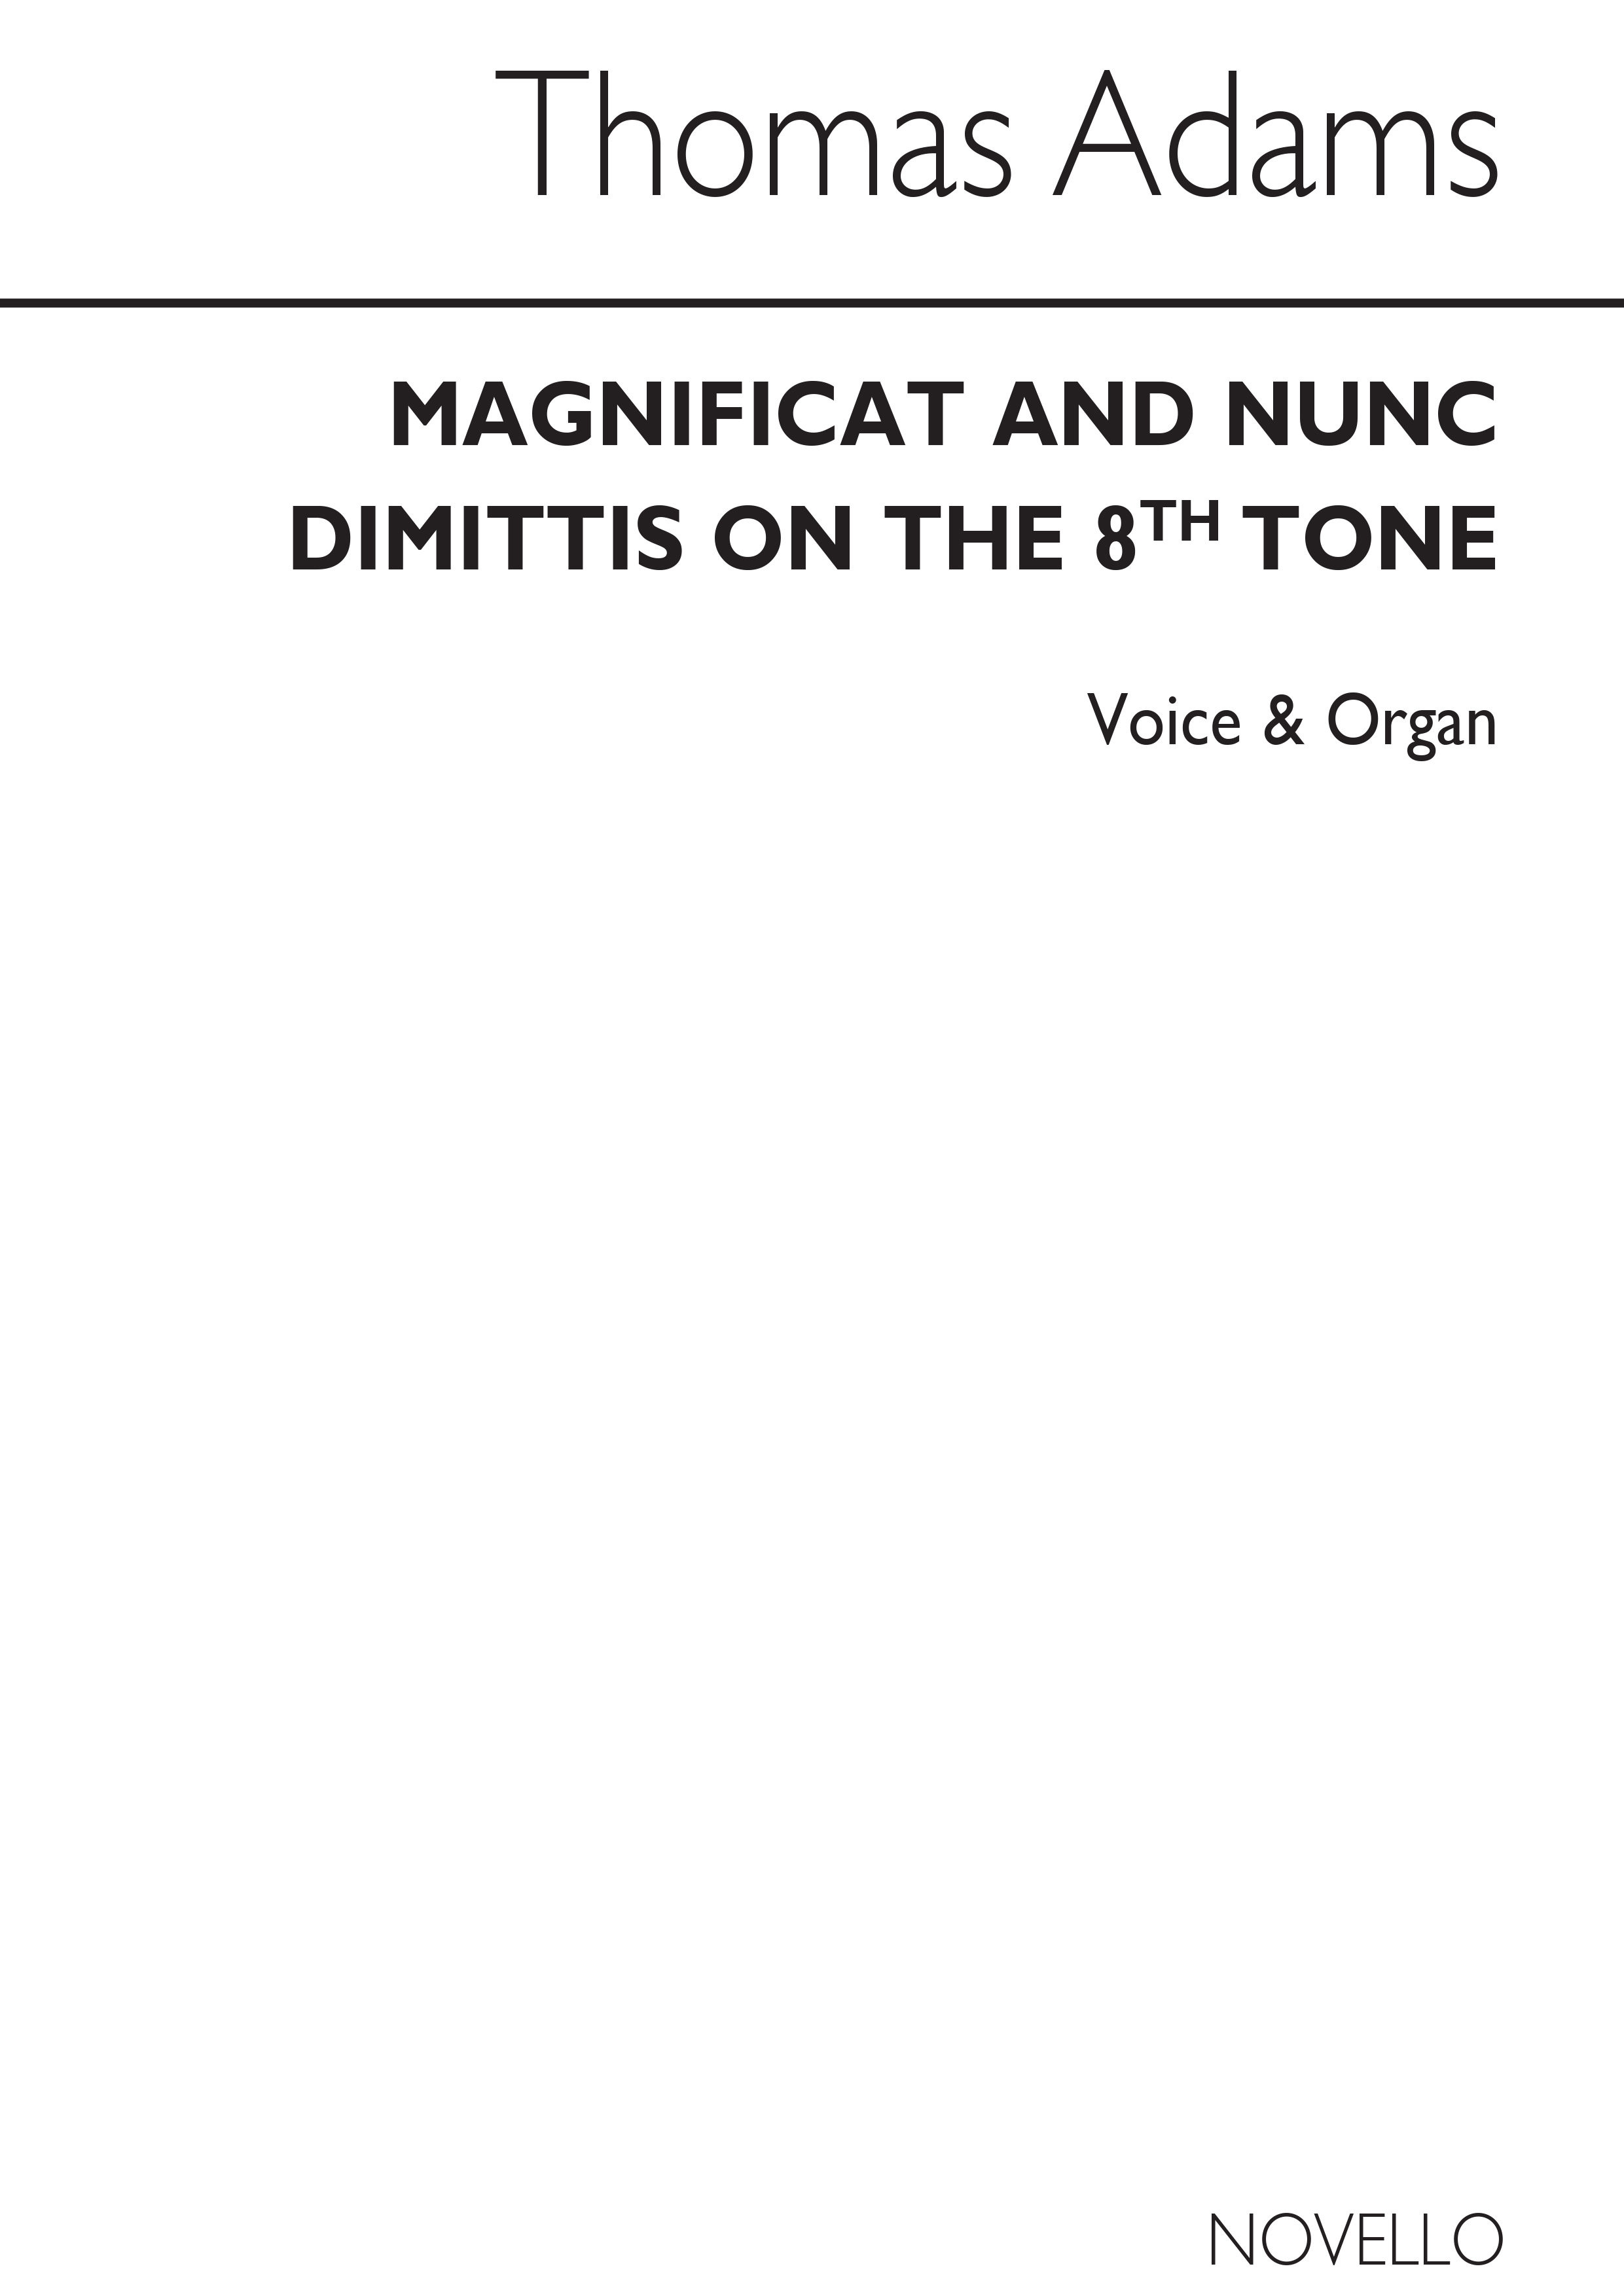 Thomas Adams: Magnificat&nunc Dimittis(Greg.Tones-8th Tone,6th Ending)satb/Org